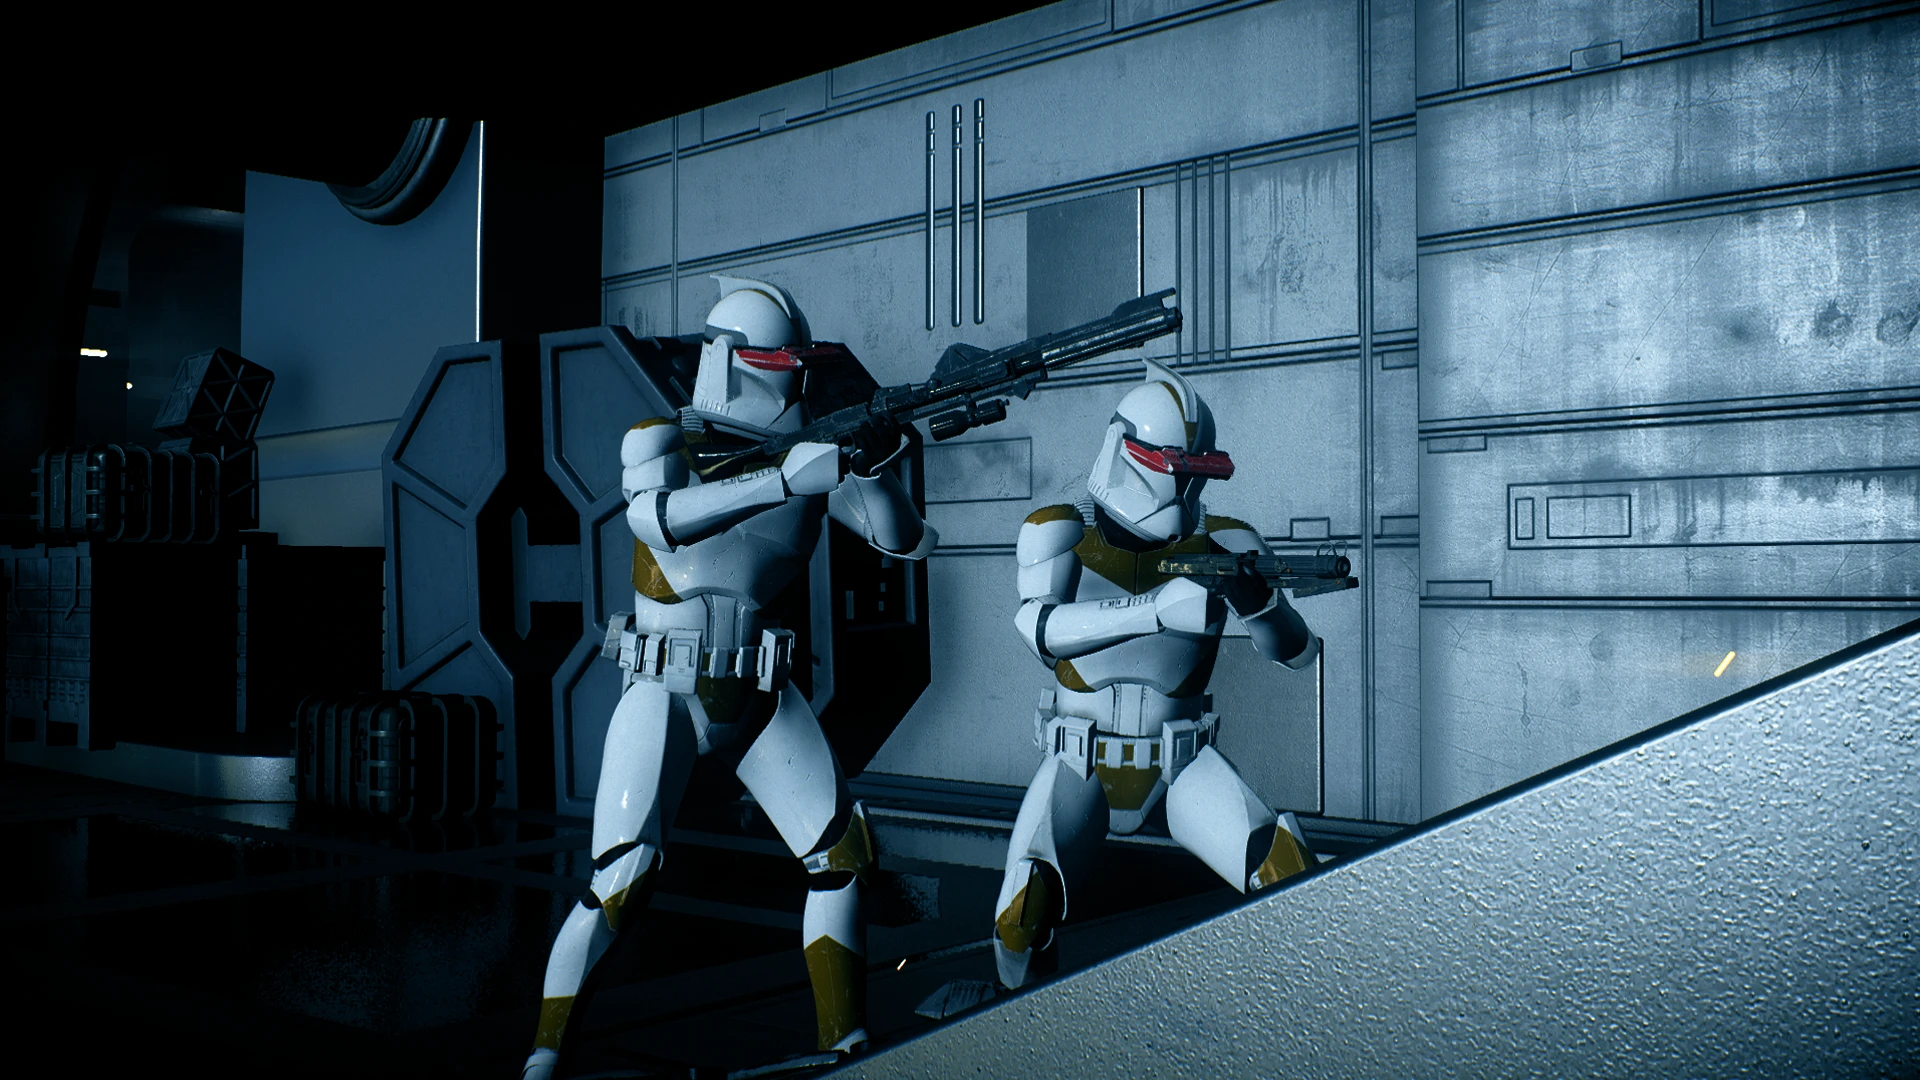 star wars battlefront 2 clone skins